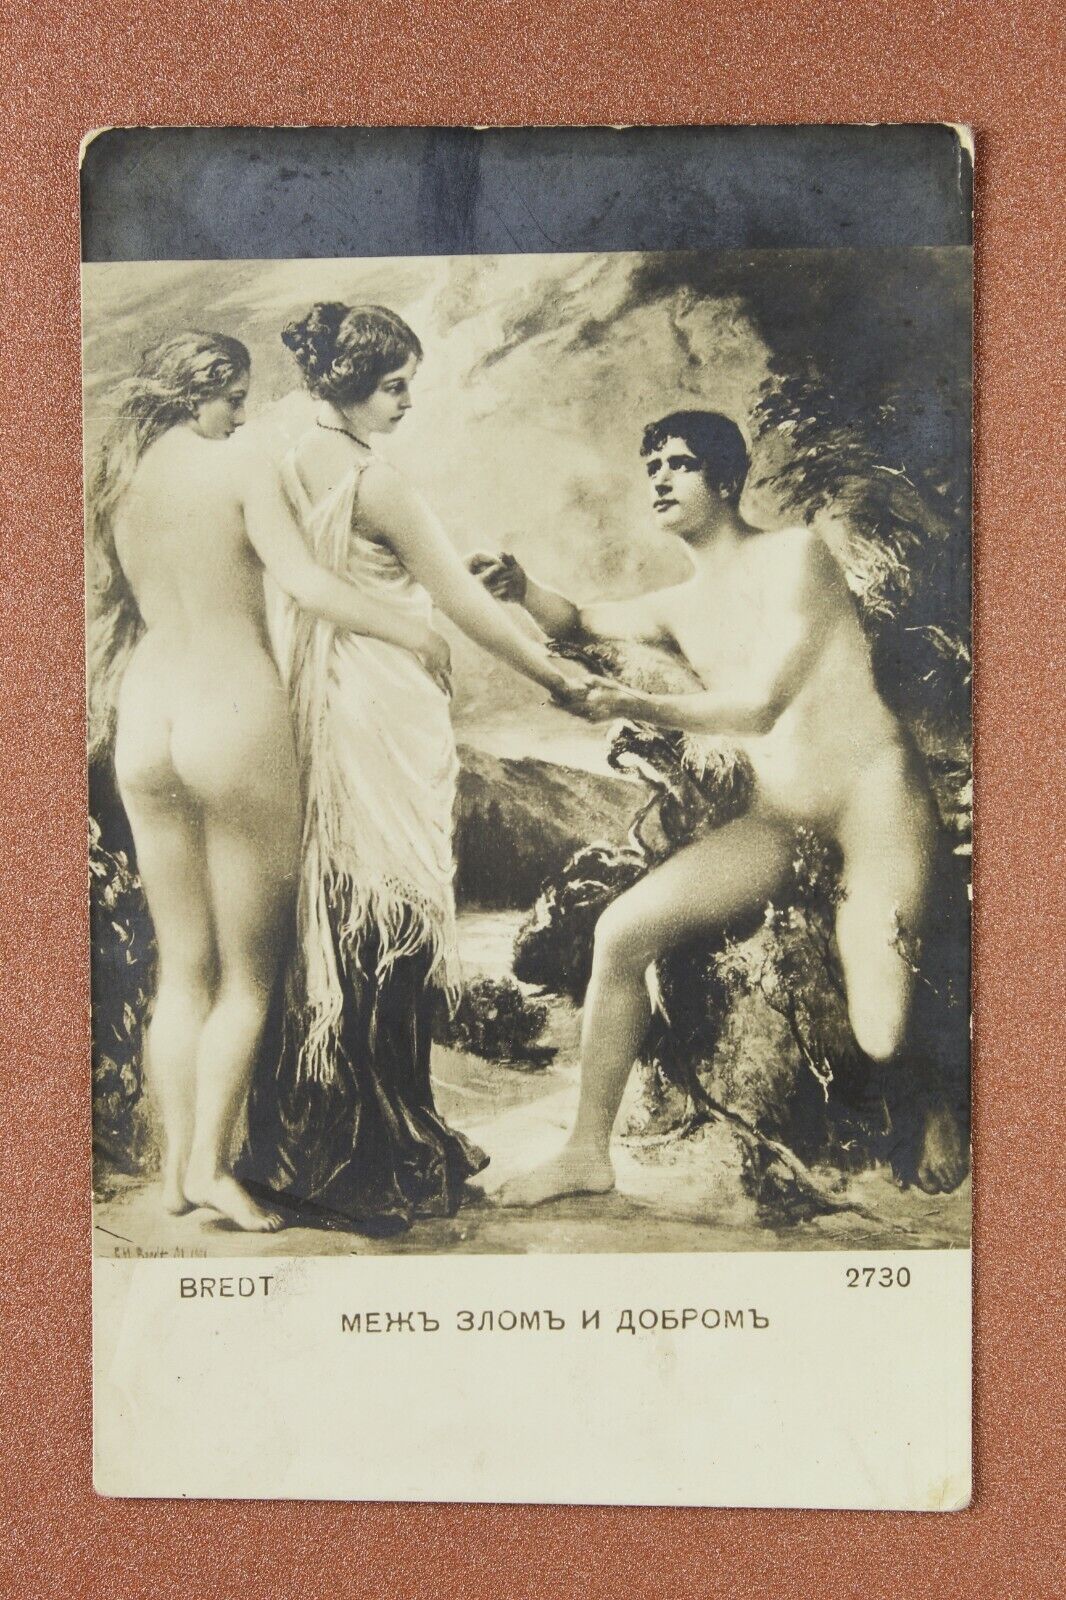 Man nude Evil - good. Glamor woman. Tsarist Russia postcard with ex-libris 1909